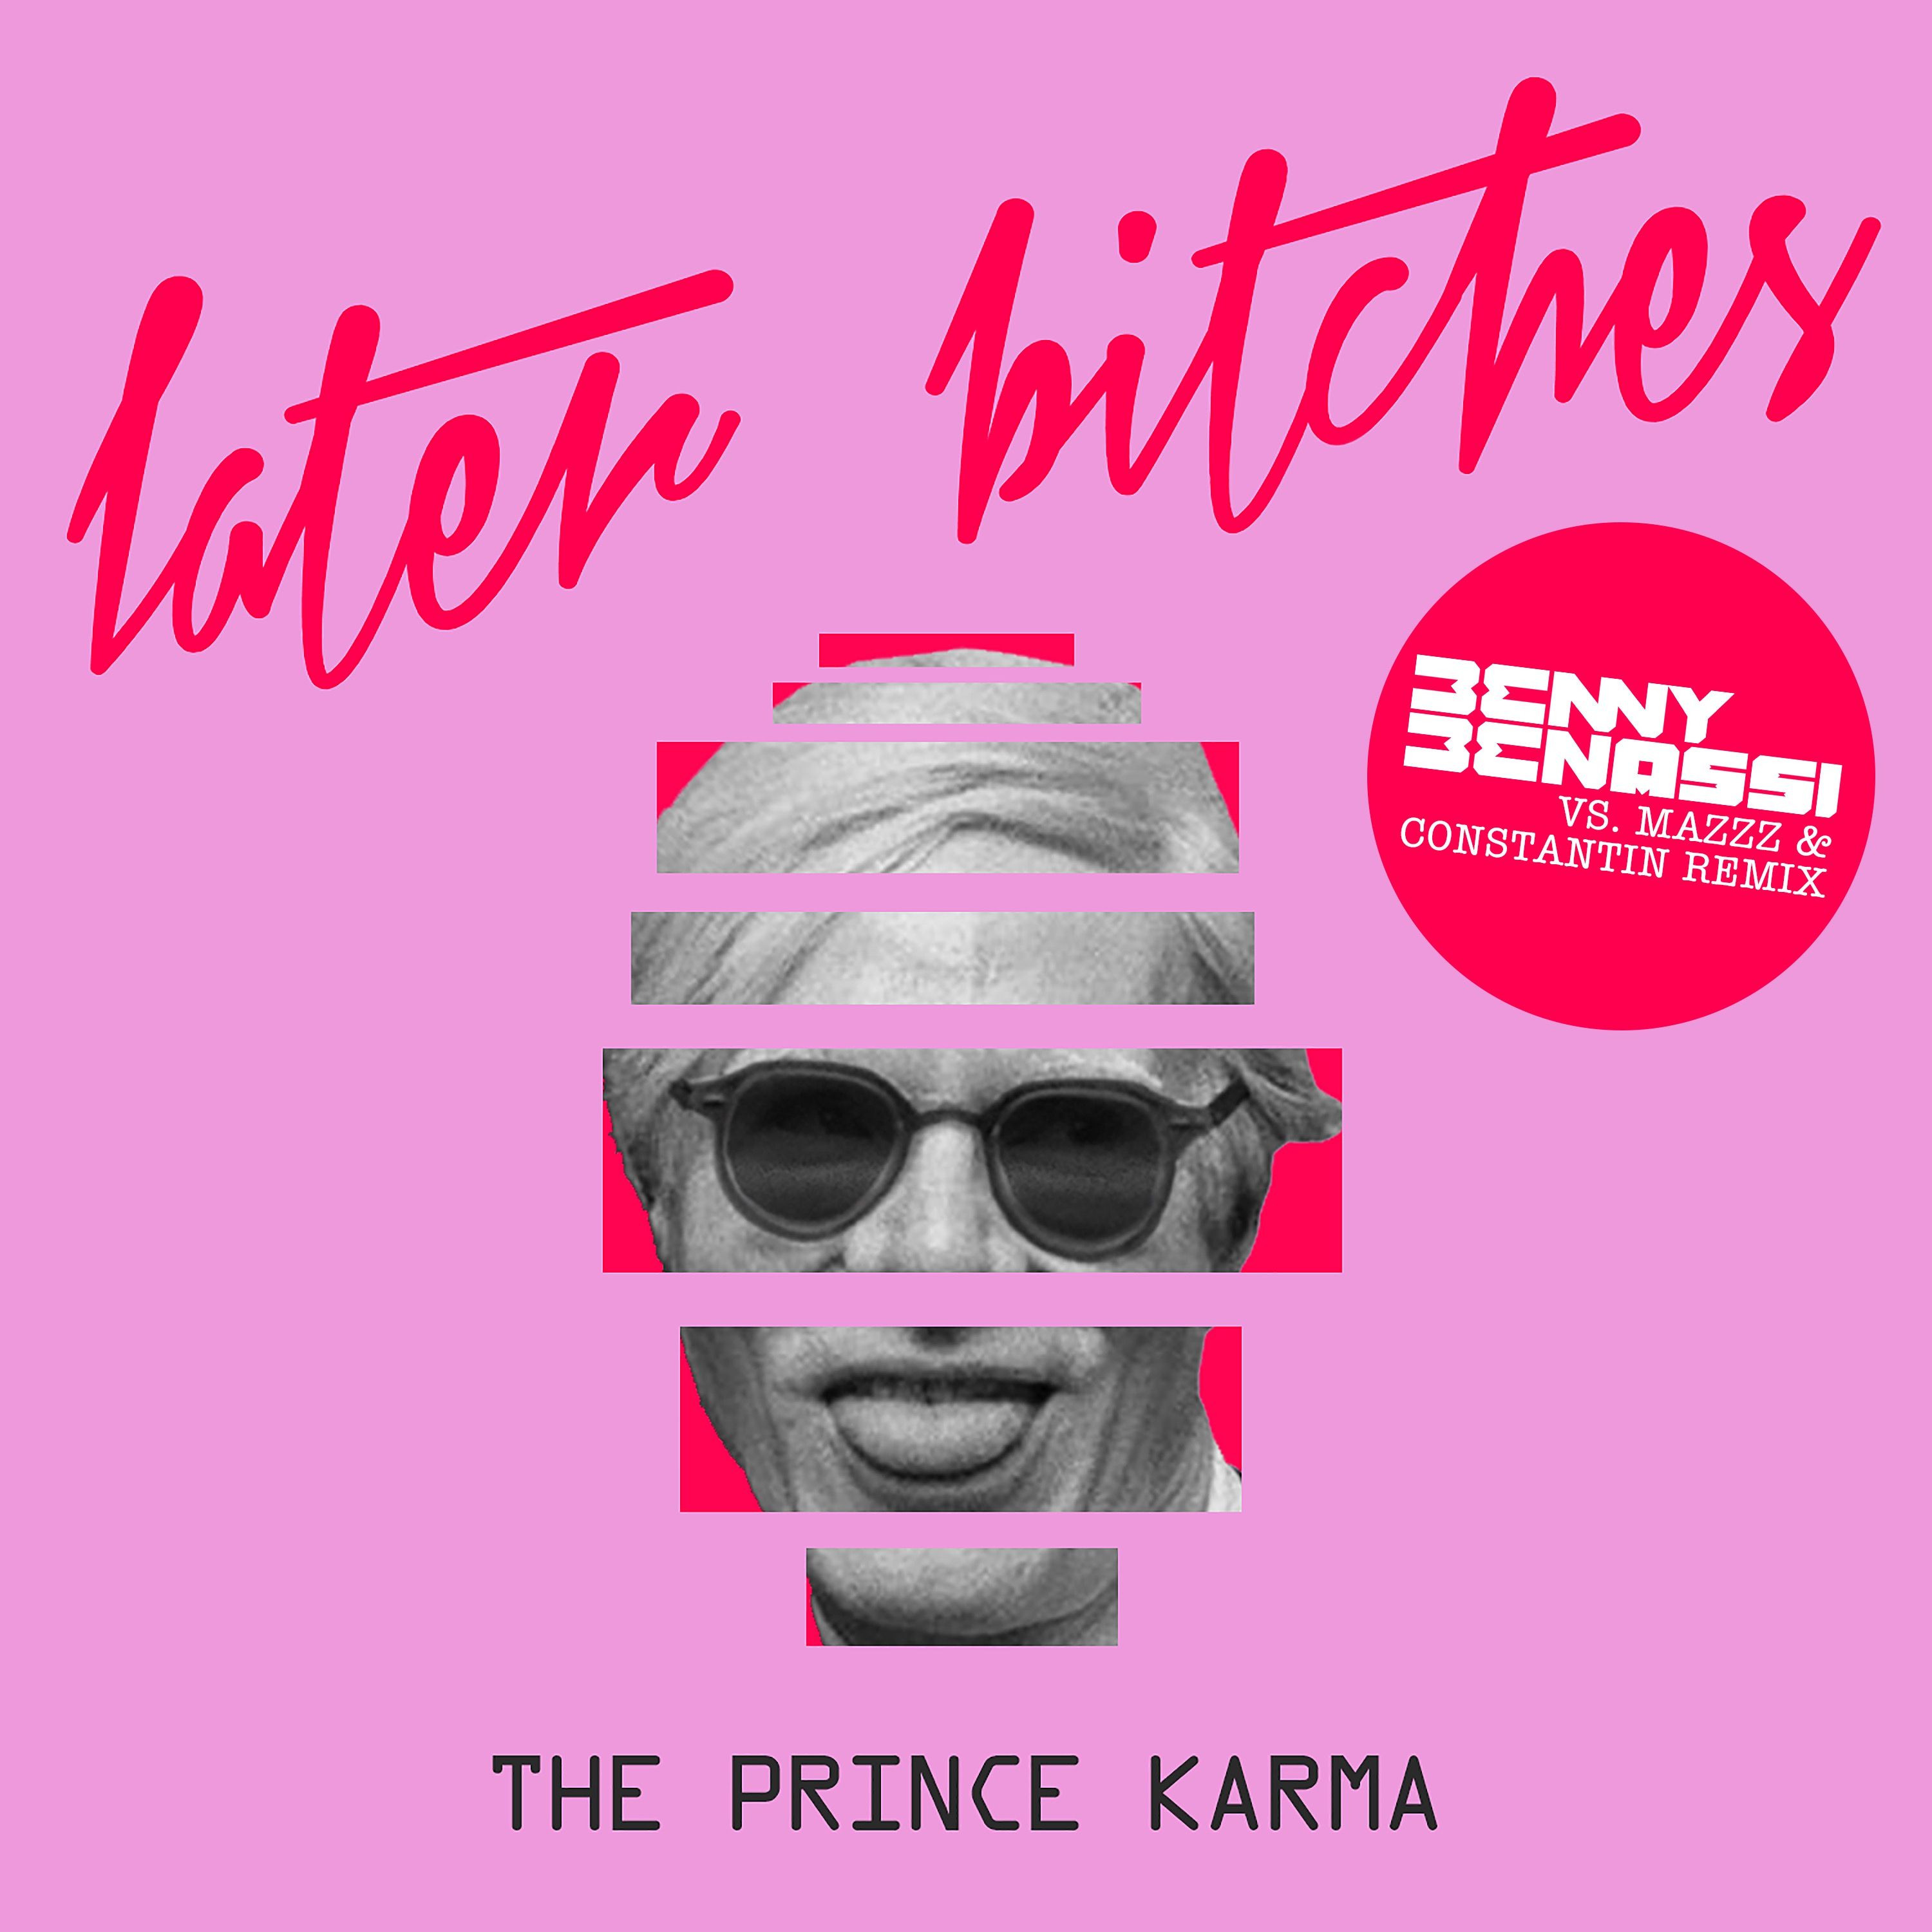 Ṣe igbasilẹ The Prince Karma - Later Bitches (Benny Benassi Vs. MazZz & Constantin Remix)